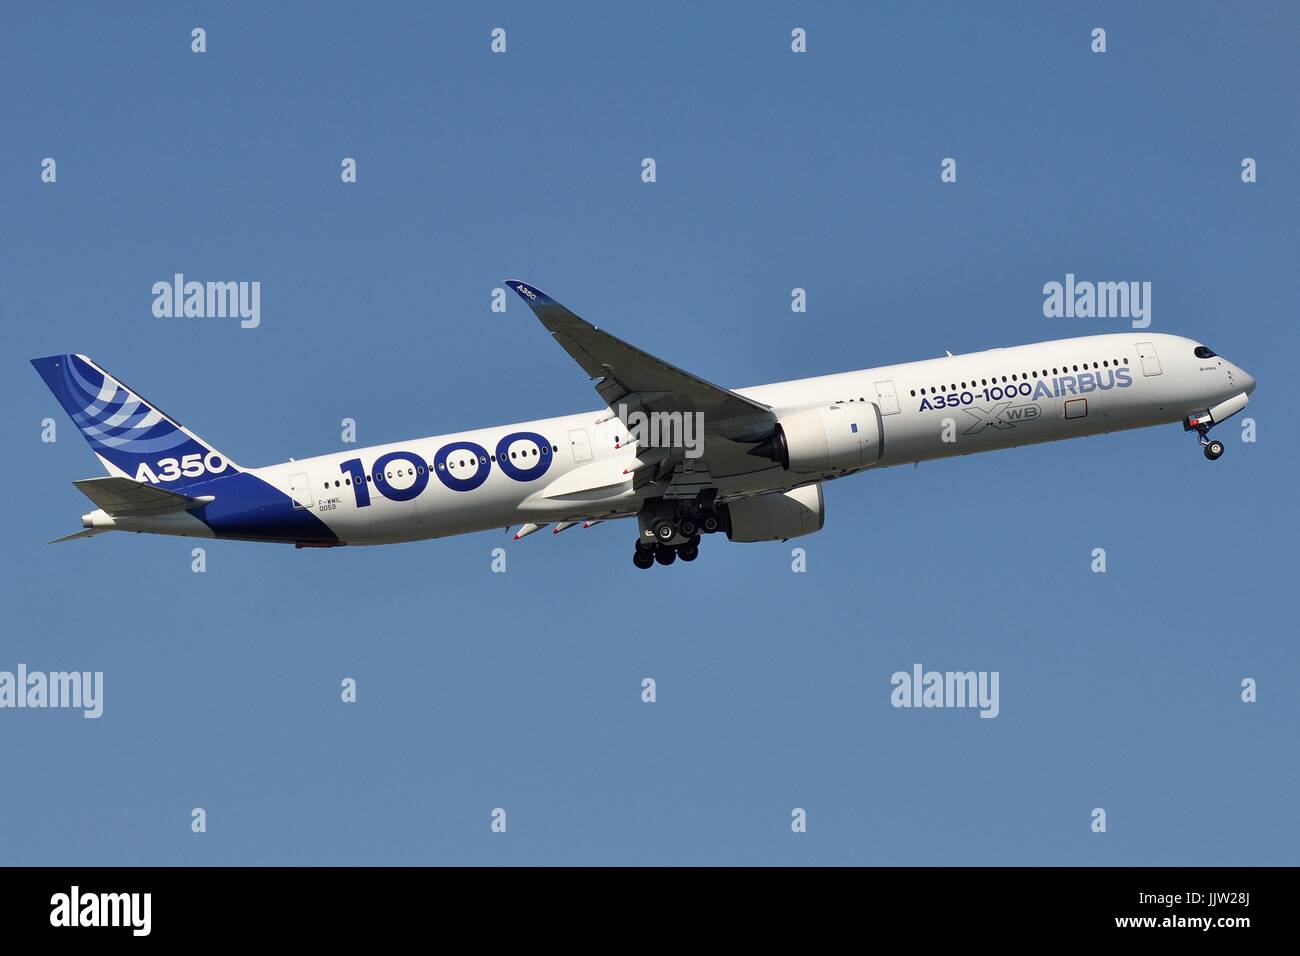 AIRBUS A350-1000 ON TEST FLIGHT Stock Photo